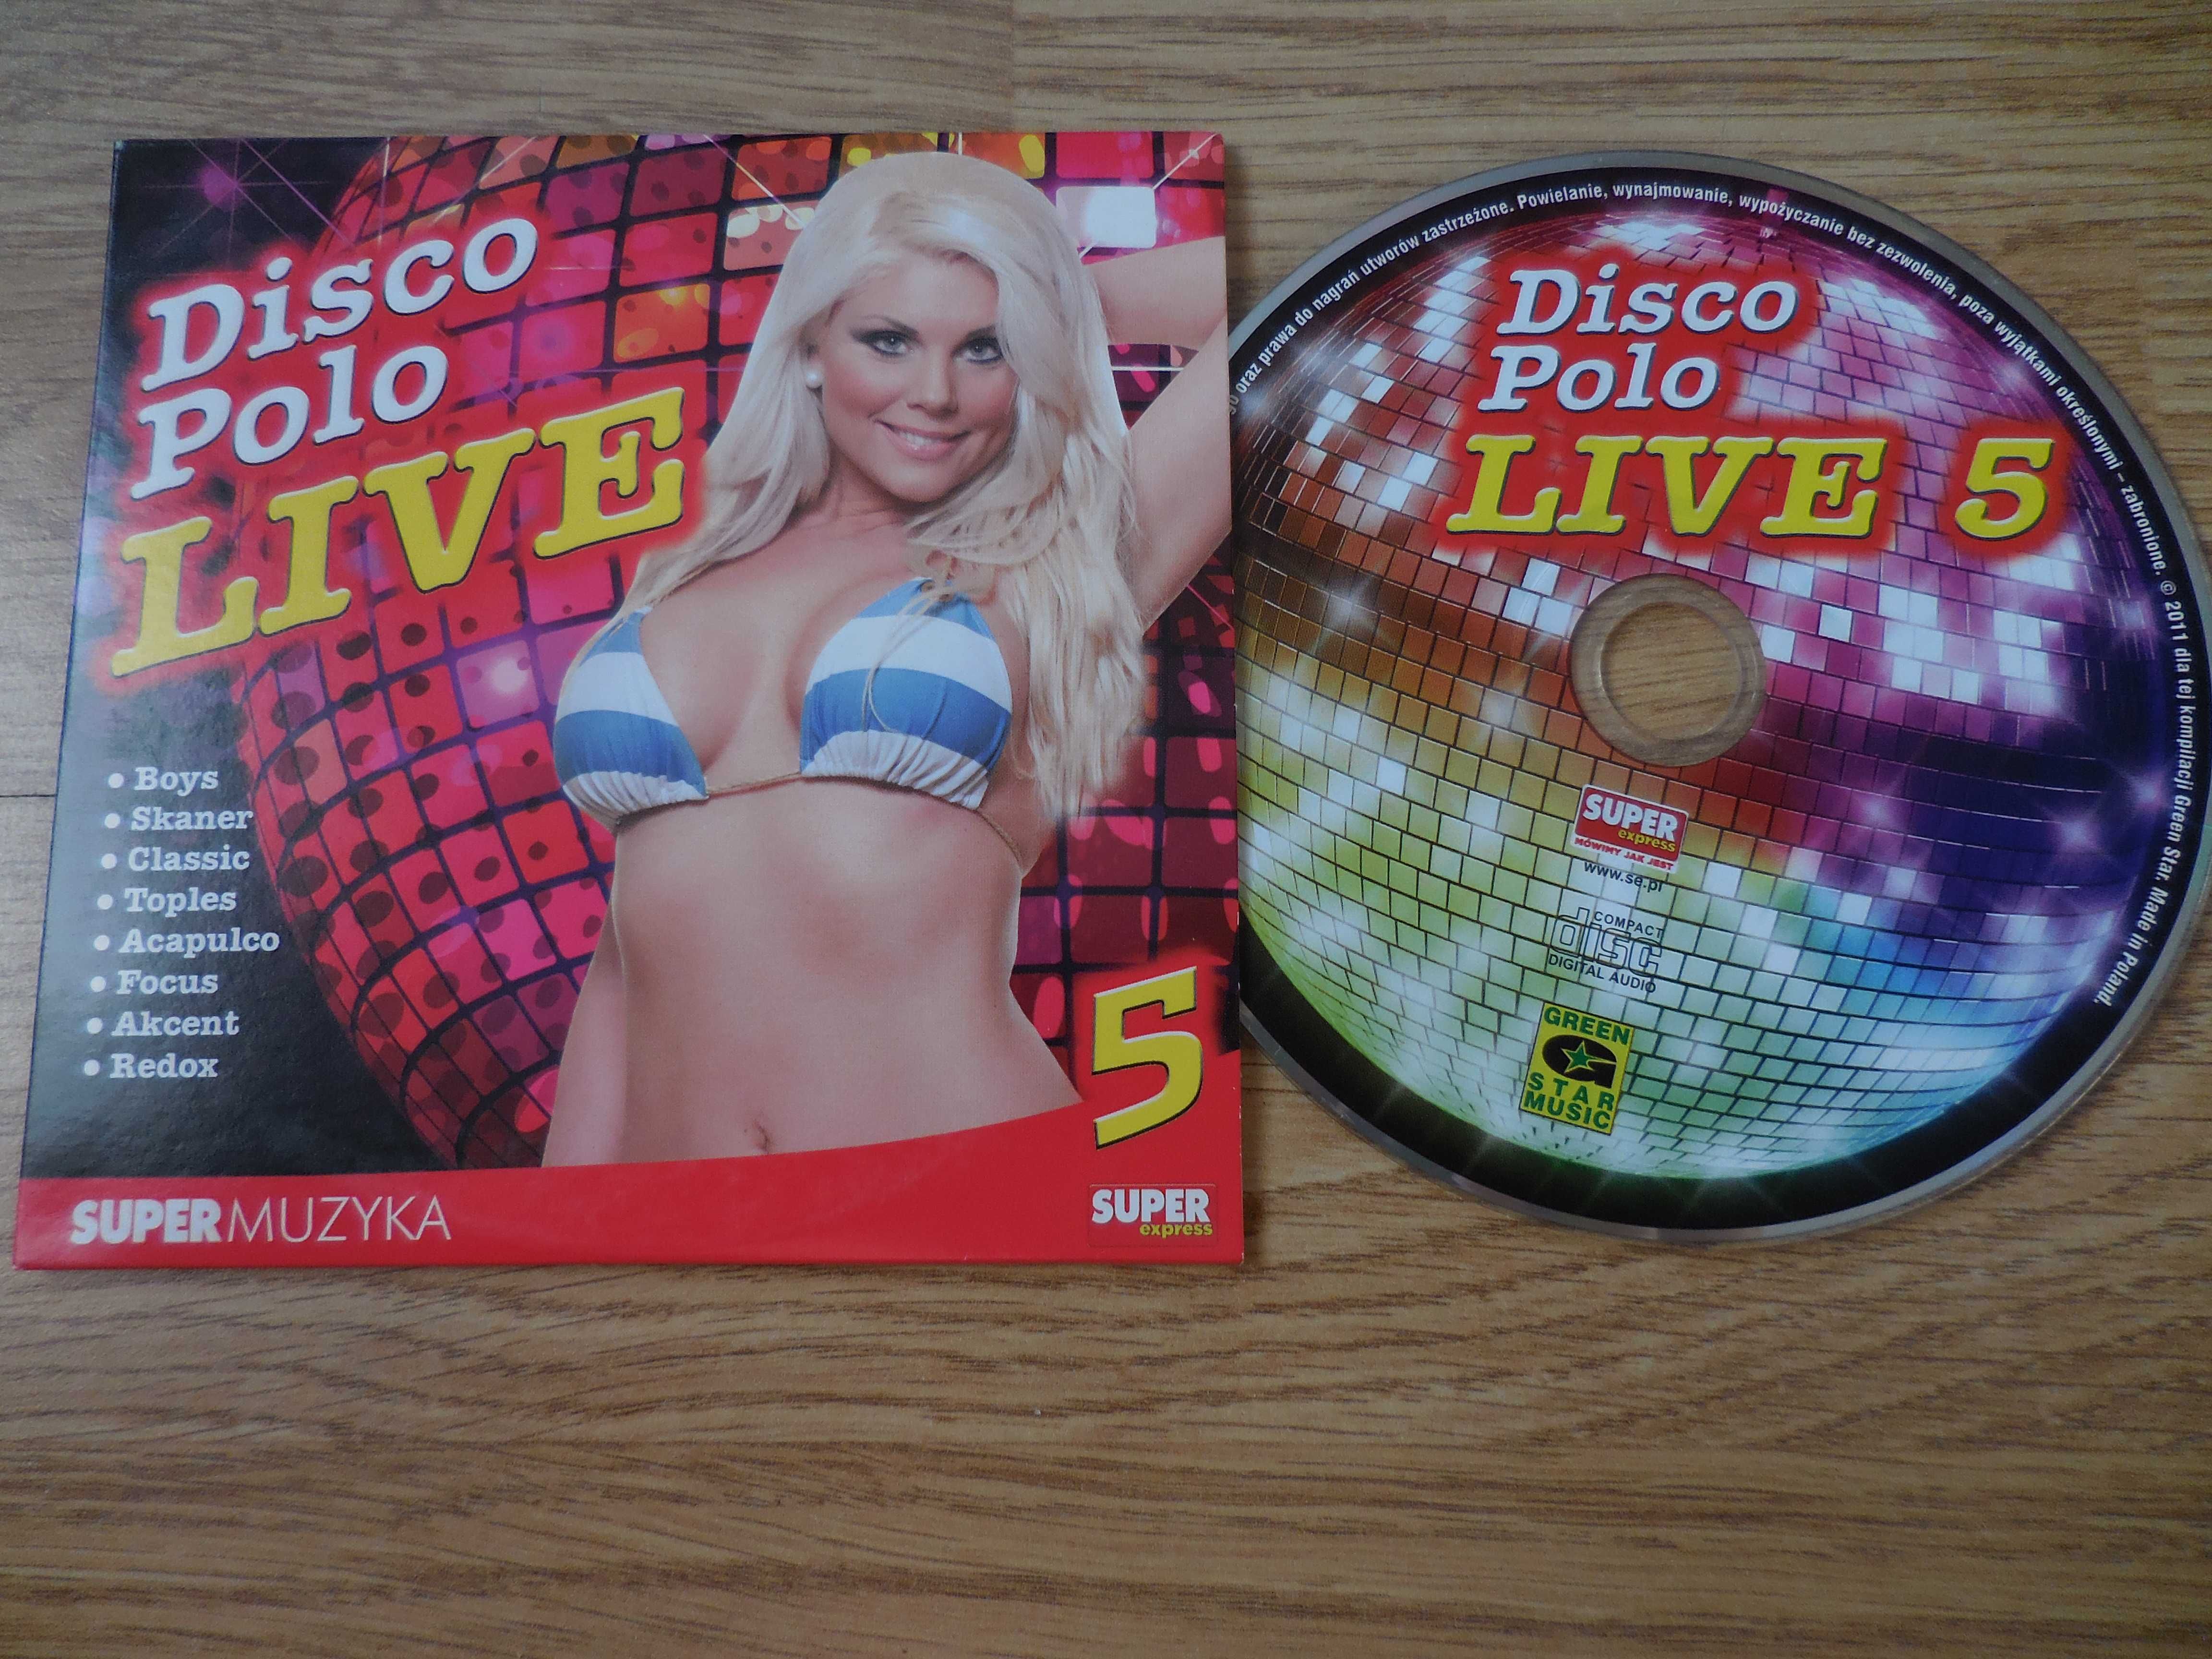 Disco polo live vol.5